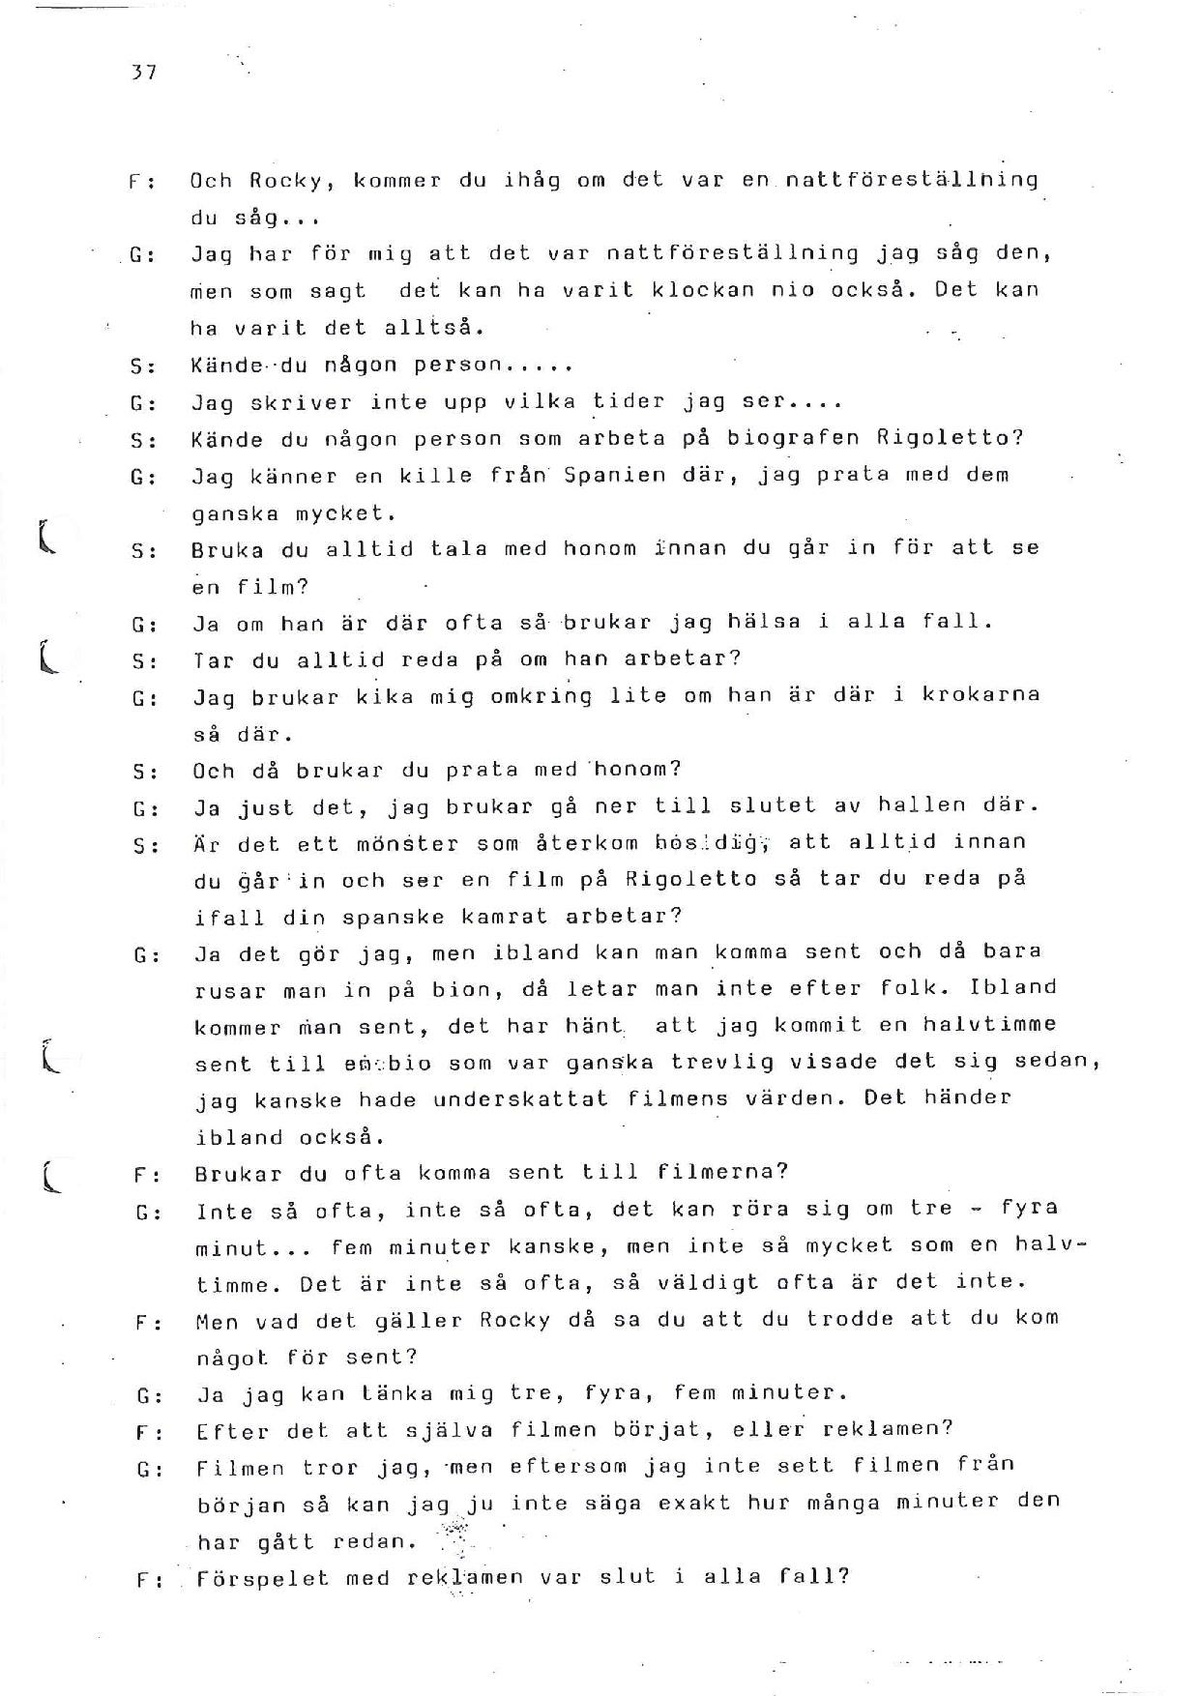 Pol-1986-04-28 N3000-00-H Förhör-VG-del1.pdf